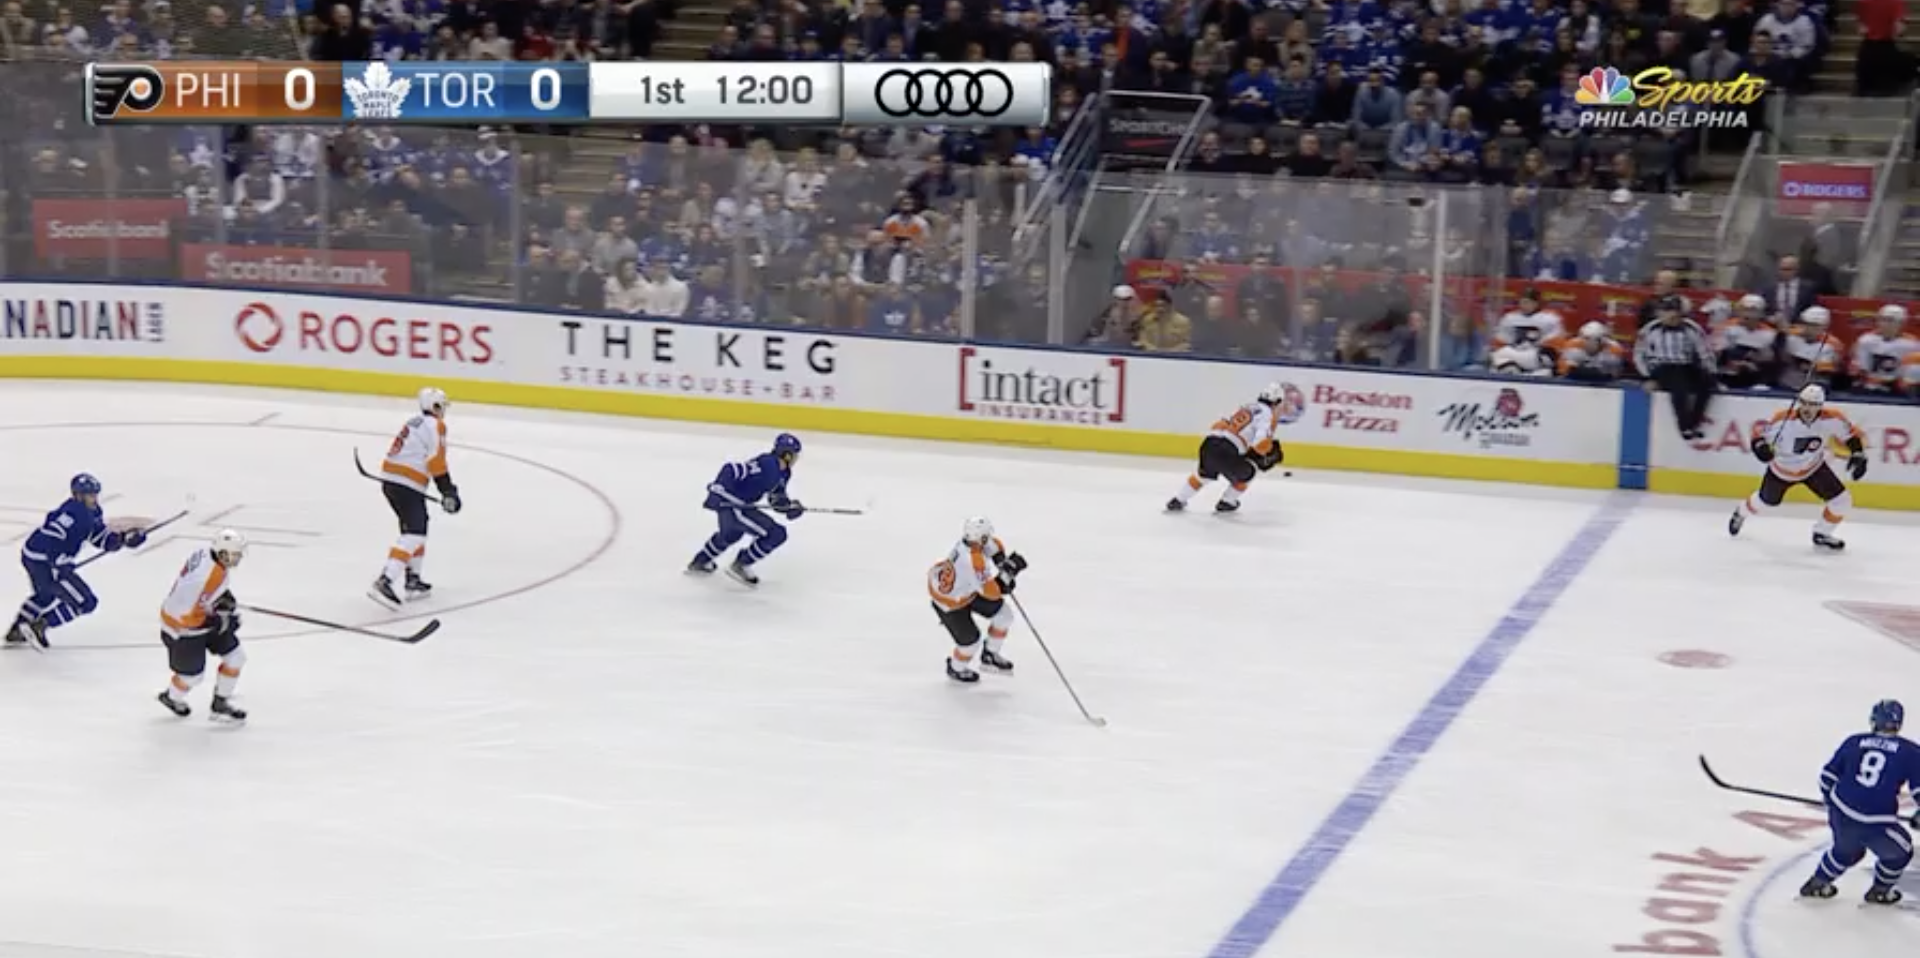 Toronto Maple Leafs vs. Philadelphia Flyers, bad coverage